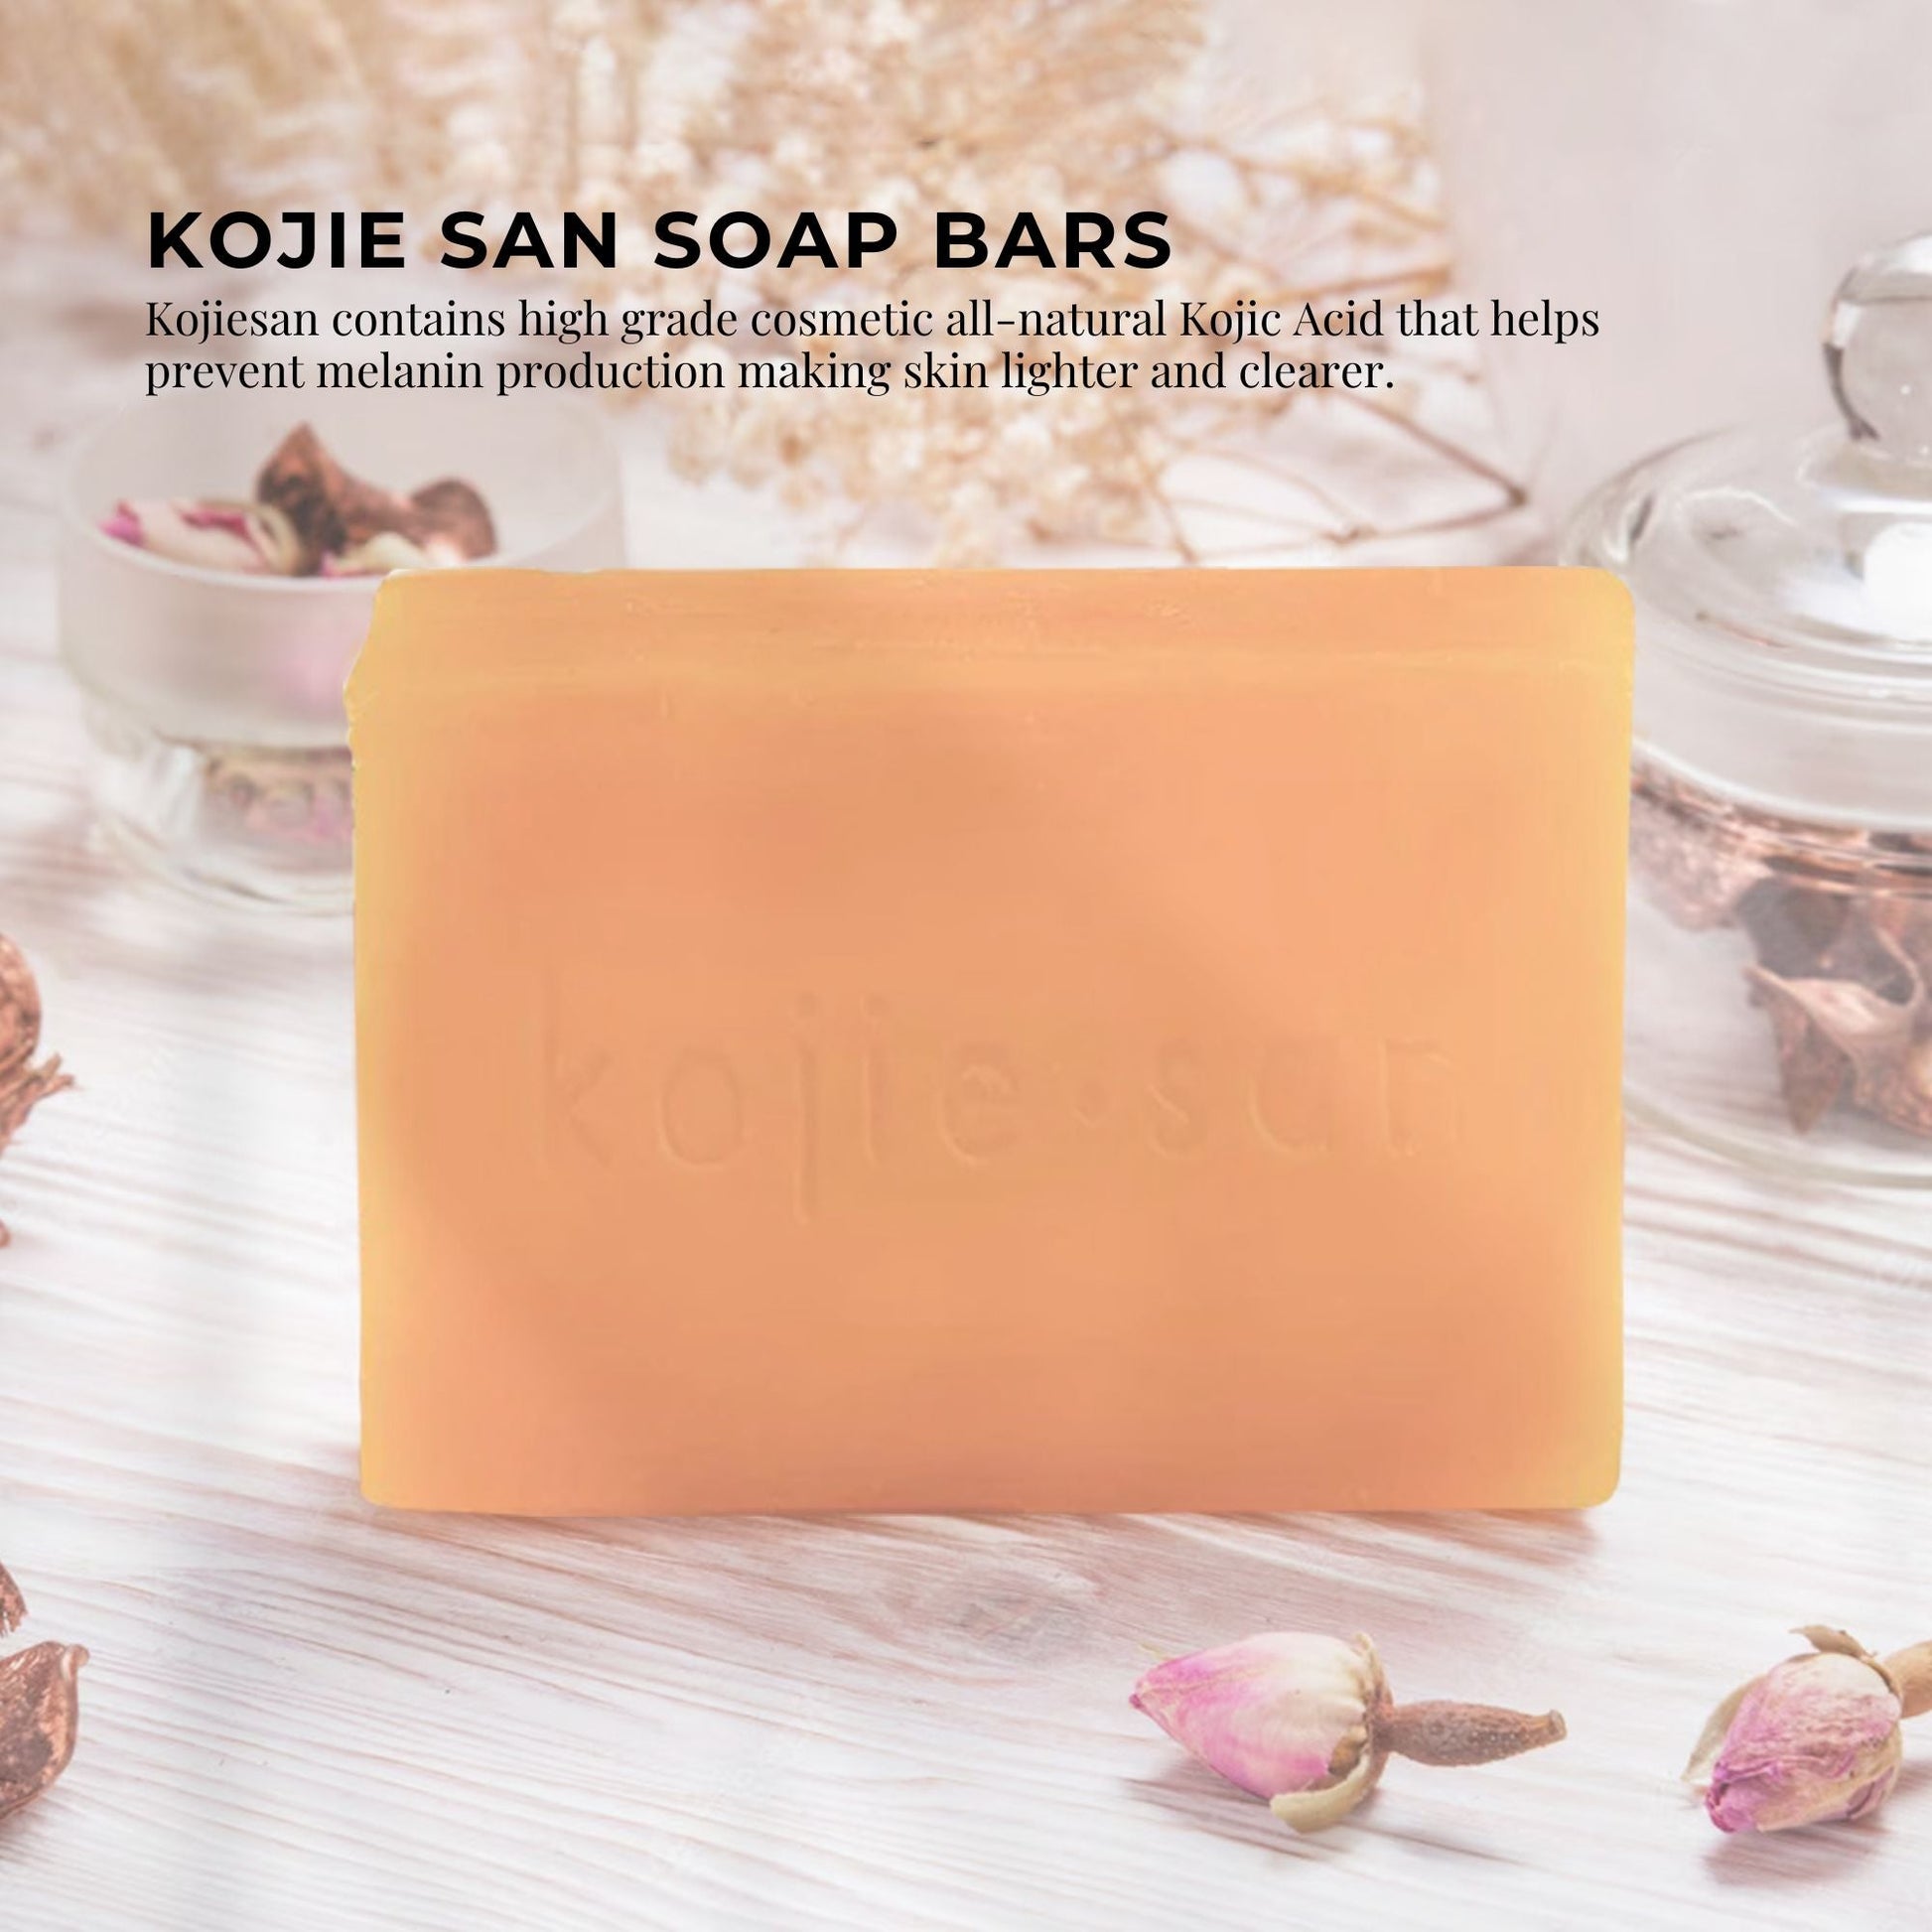 6x Kojie San Soap Bar - 135g Skin Lightening Kojic Acid Natural Original Bars